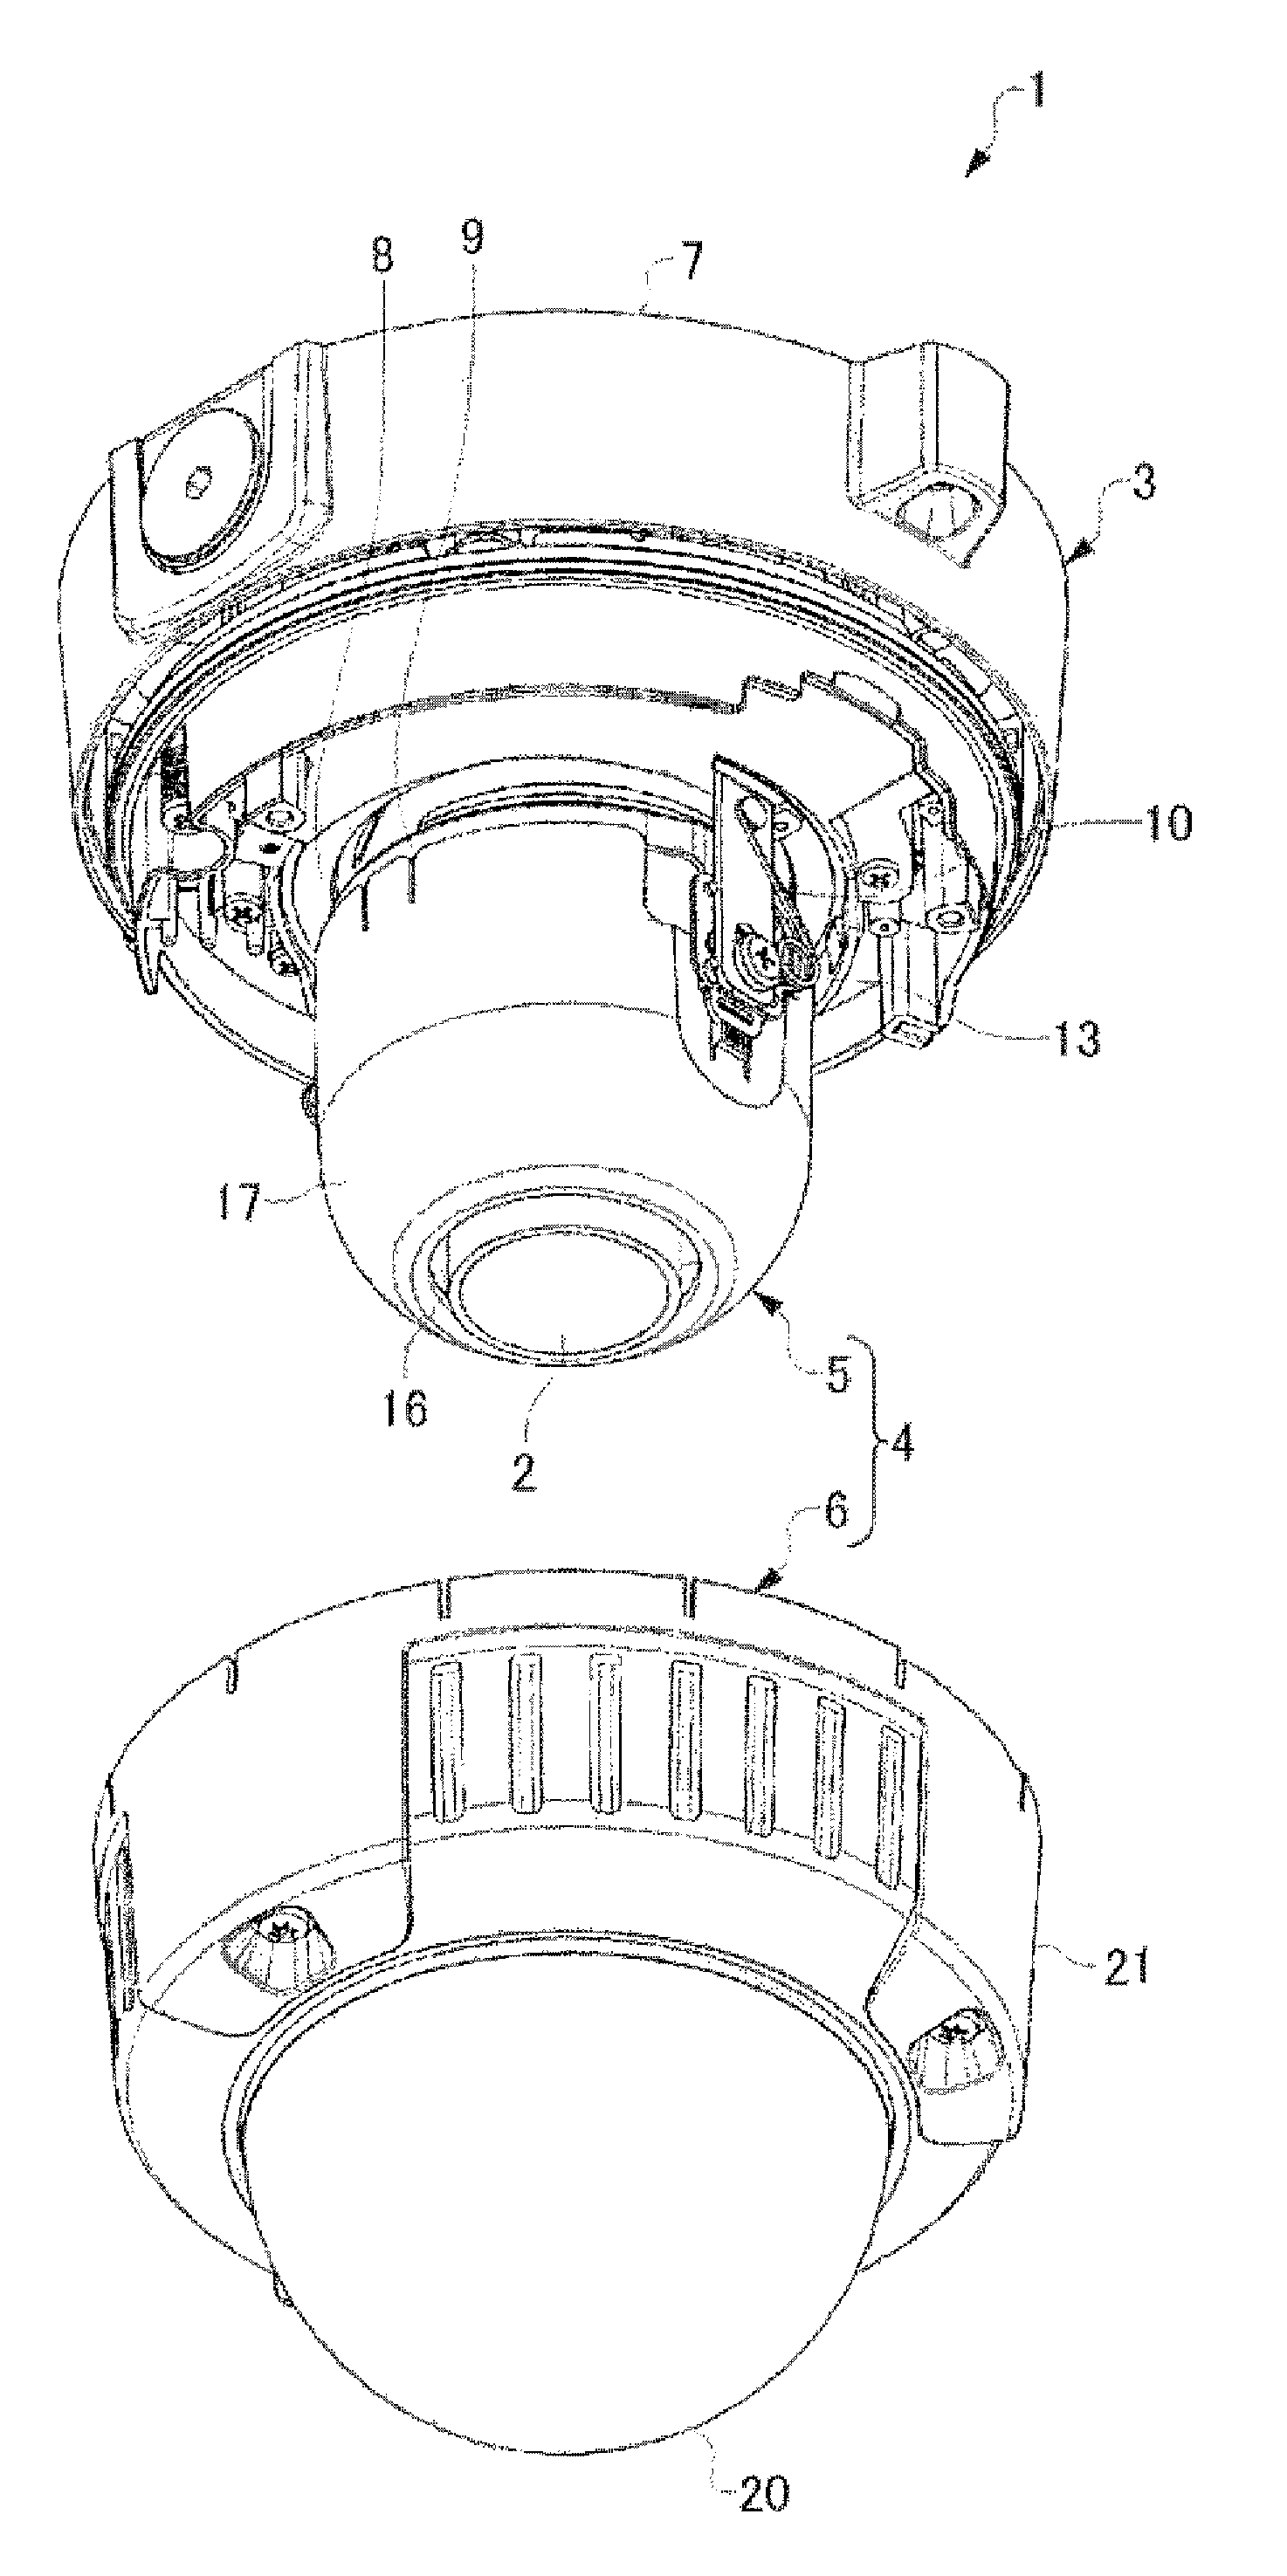 Dome-shaped camera